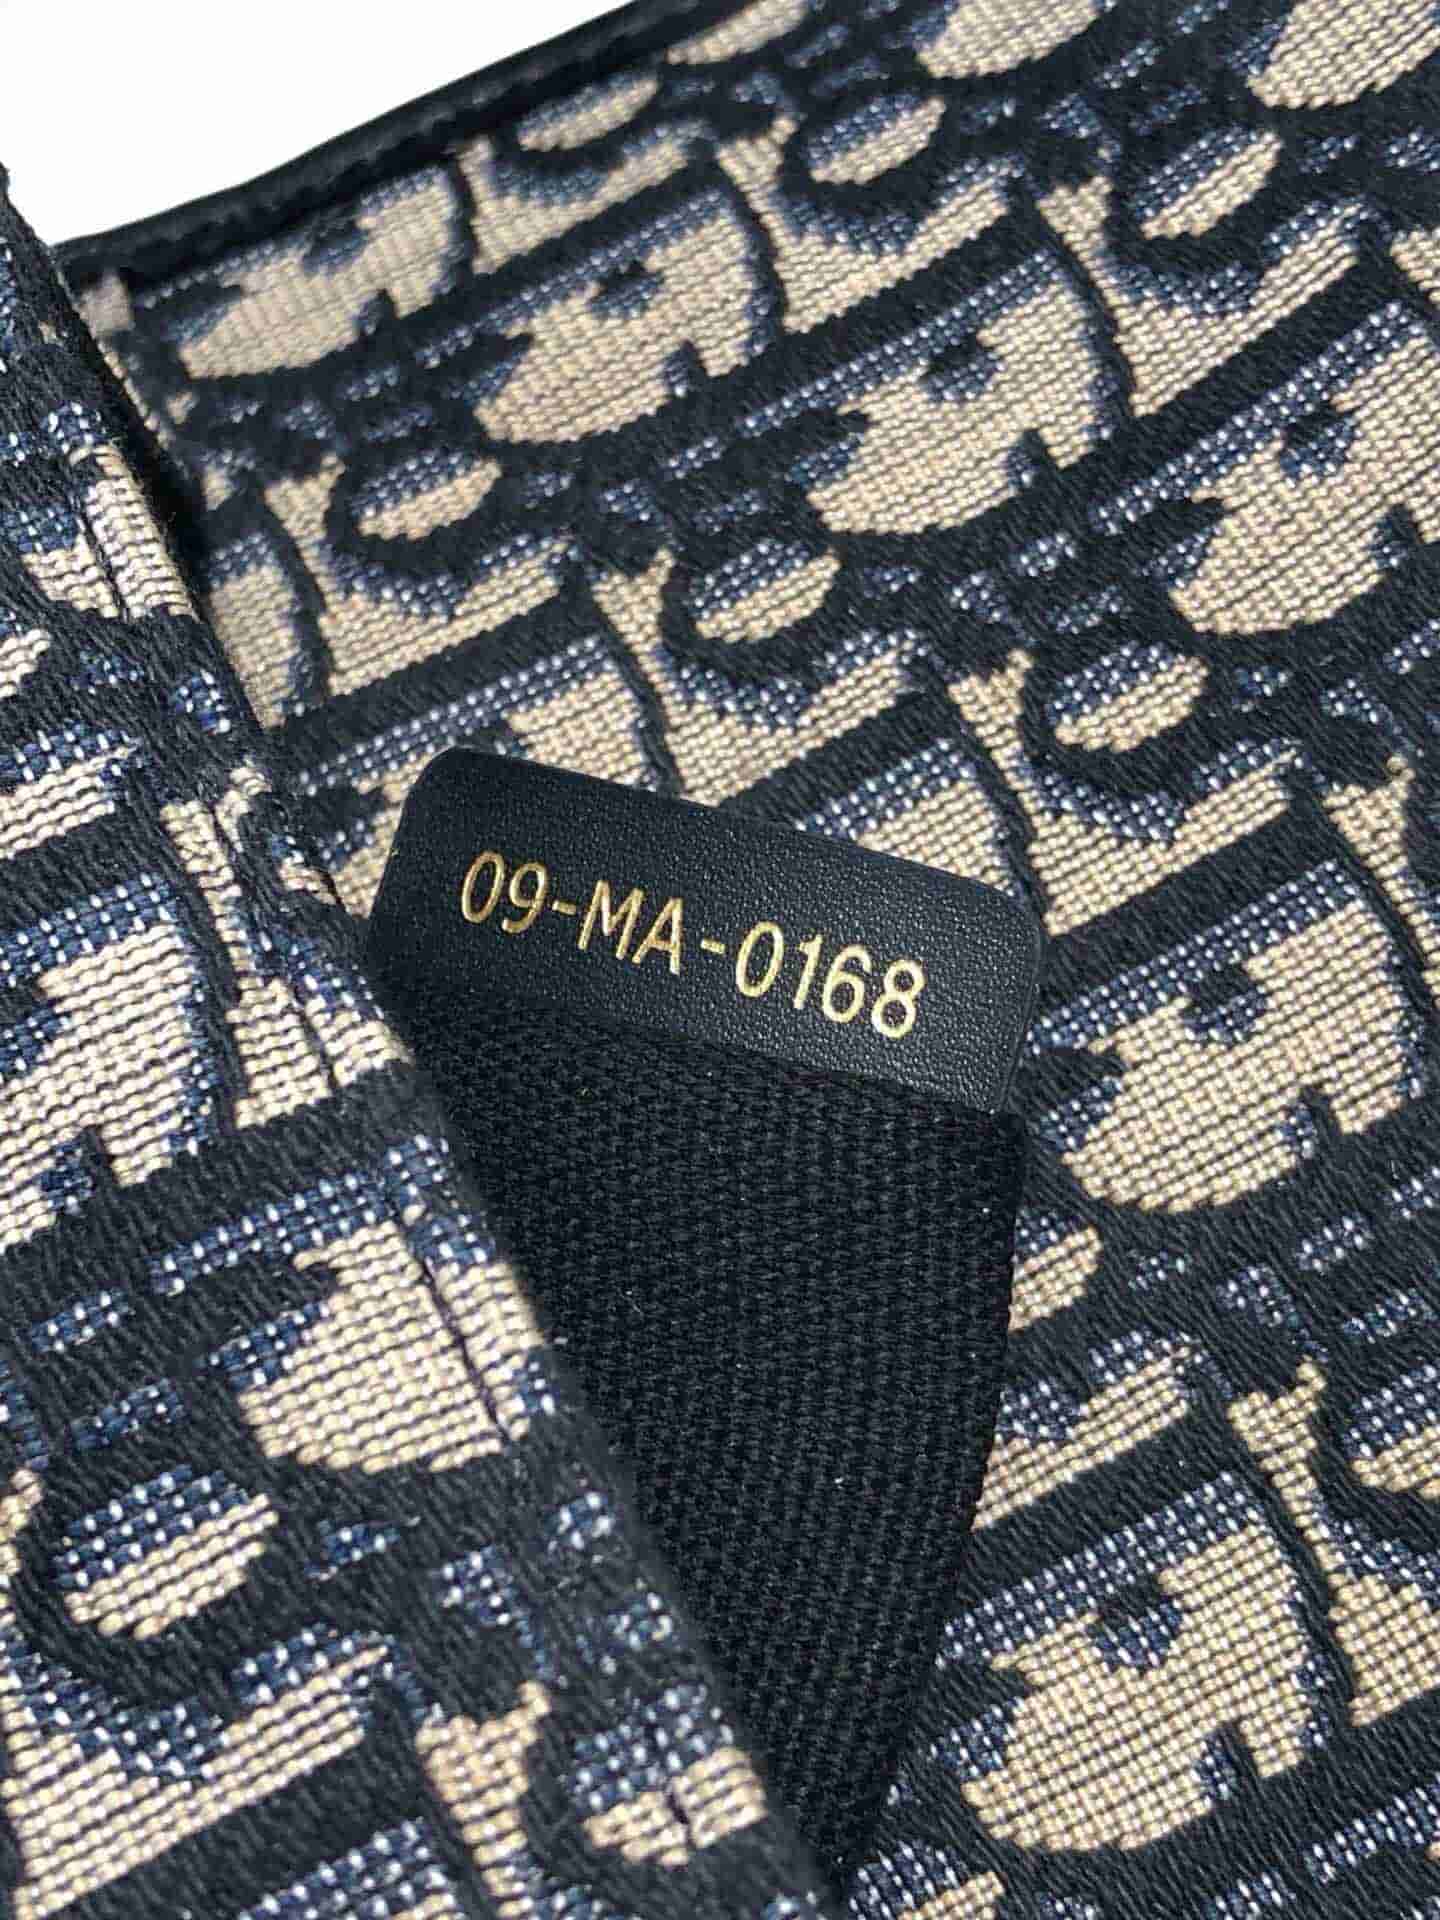 Dior迪奥 19新款30 MontaigneCD扣翻盖邮差包蒙田包单肩包斜跨包